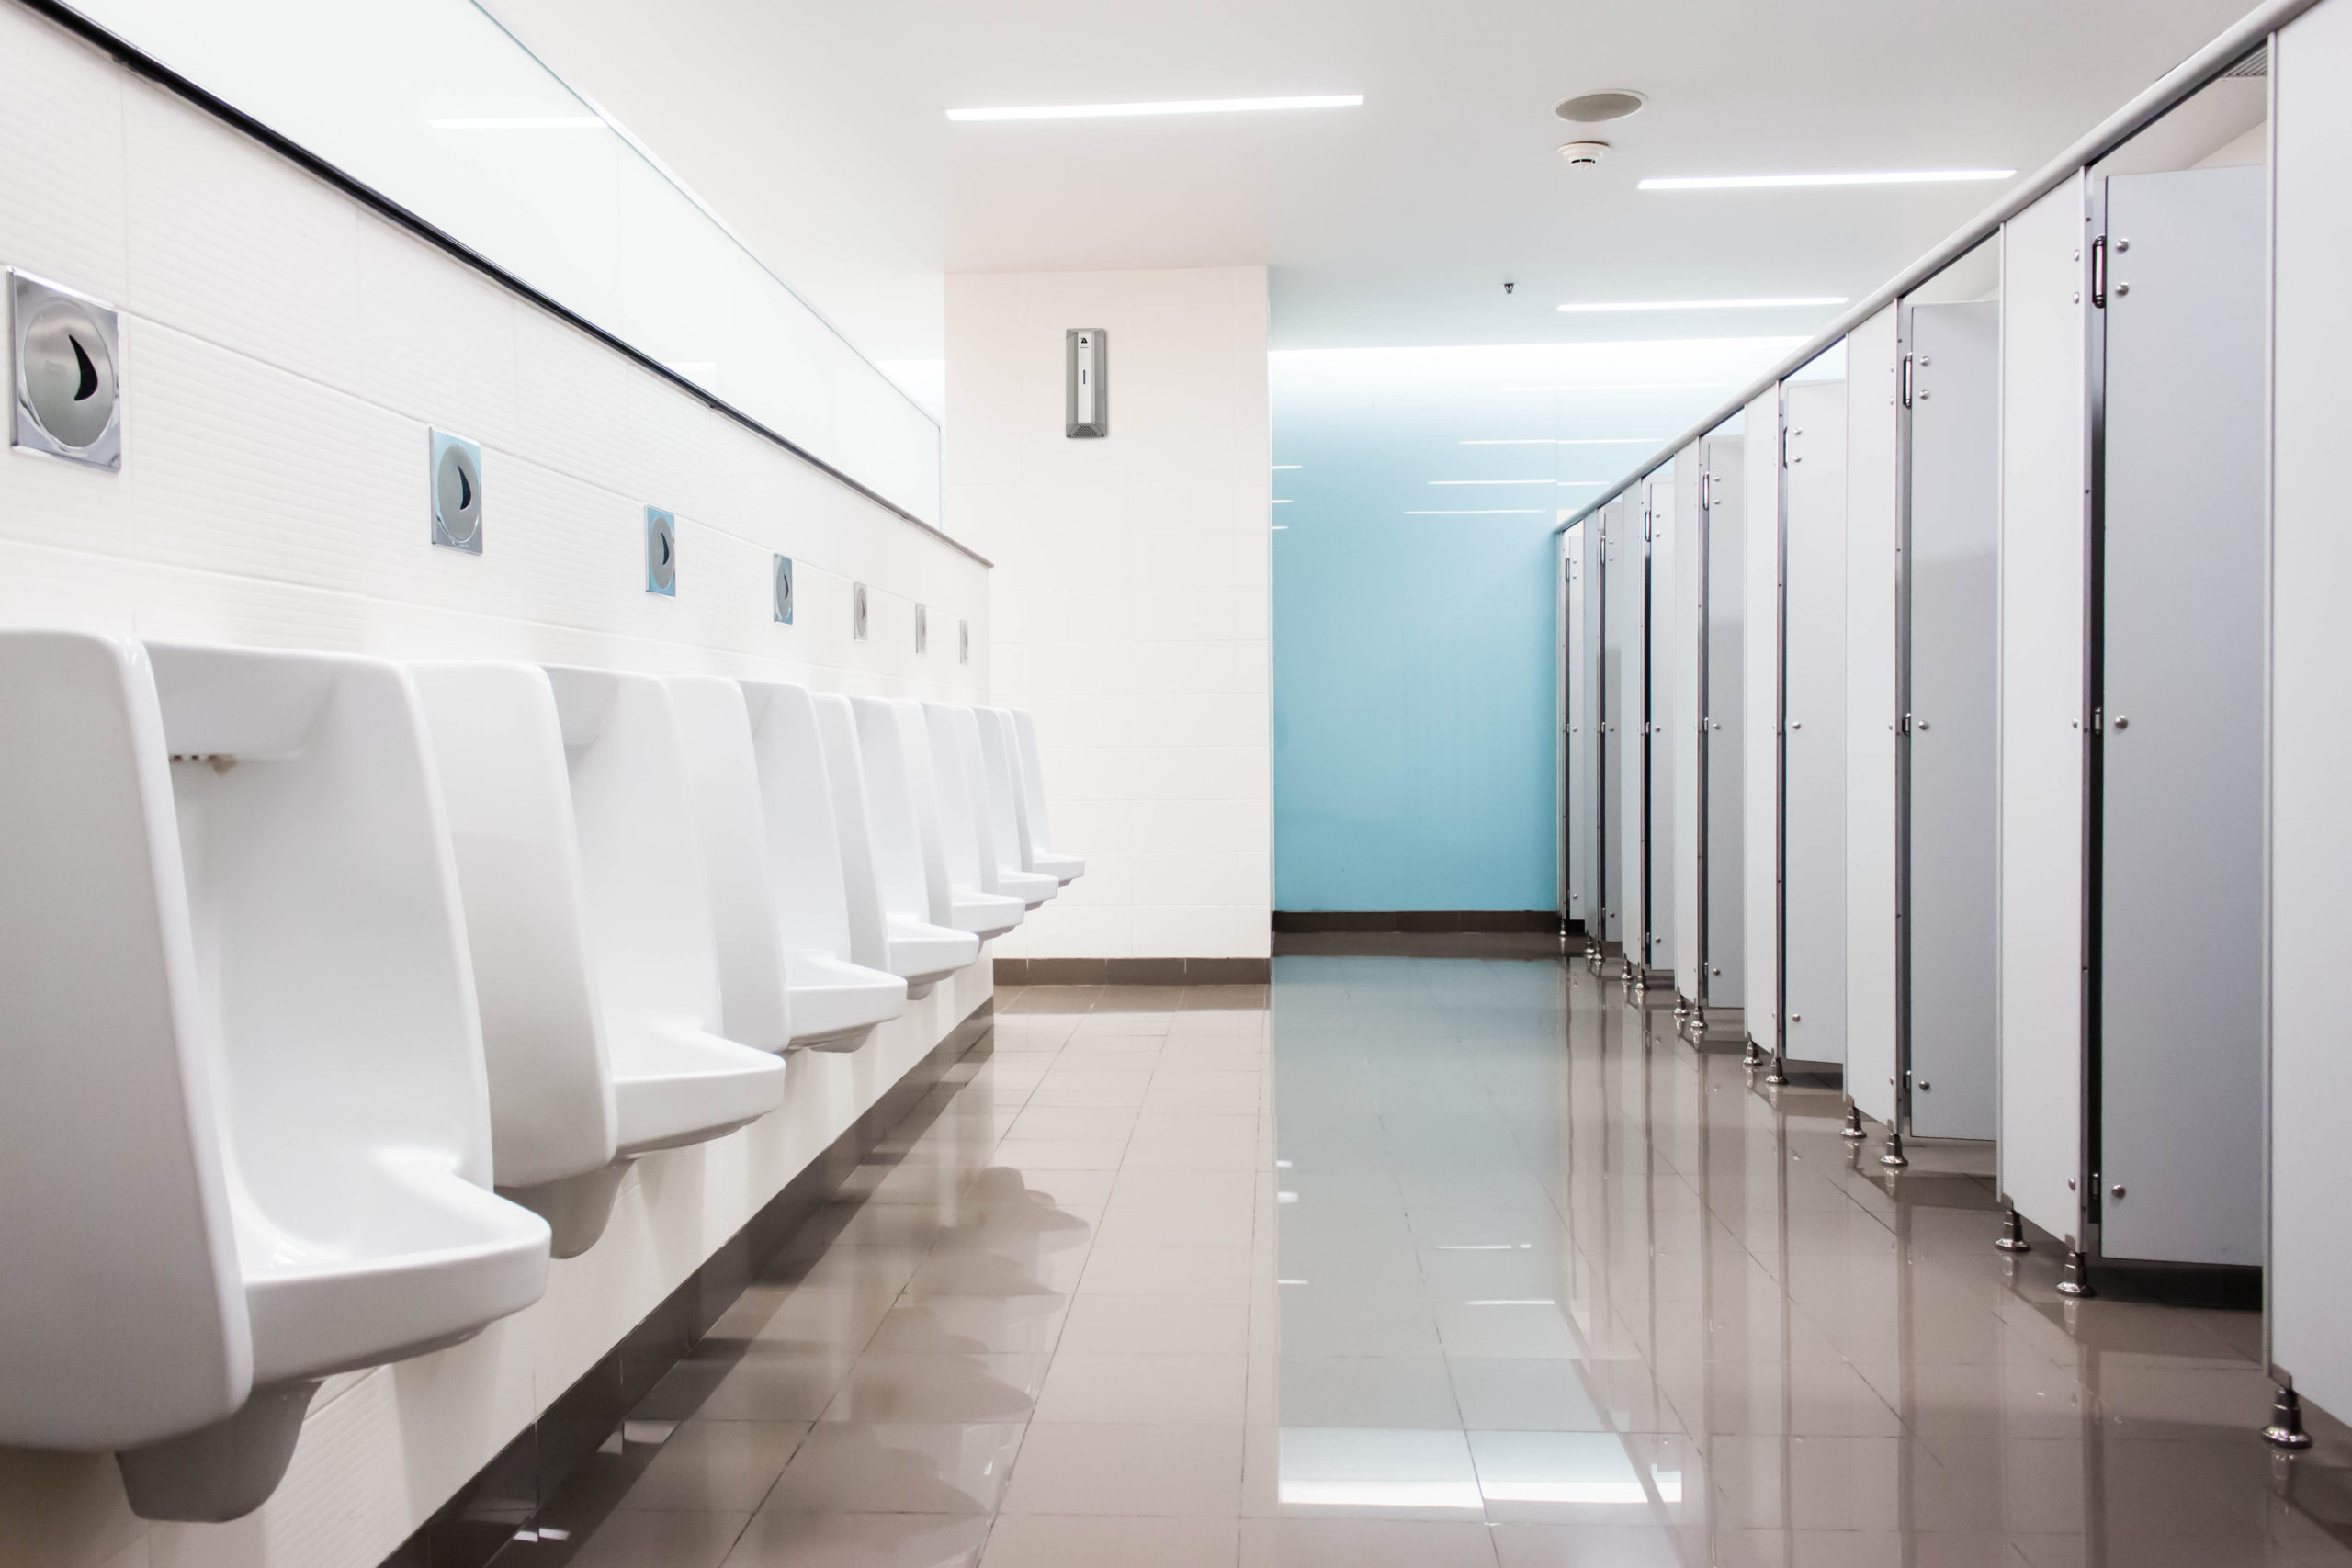 Restoring Confidence by Tackling Washroom Odours